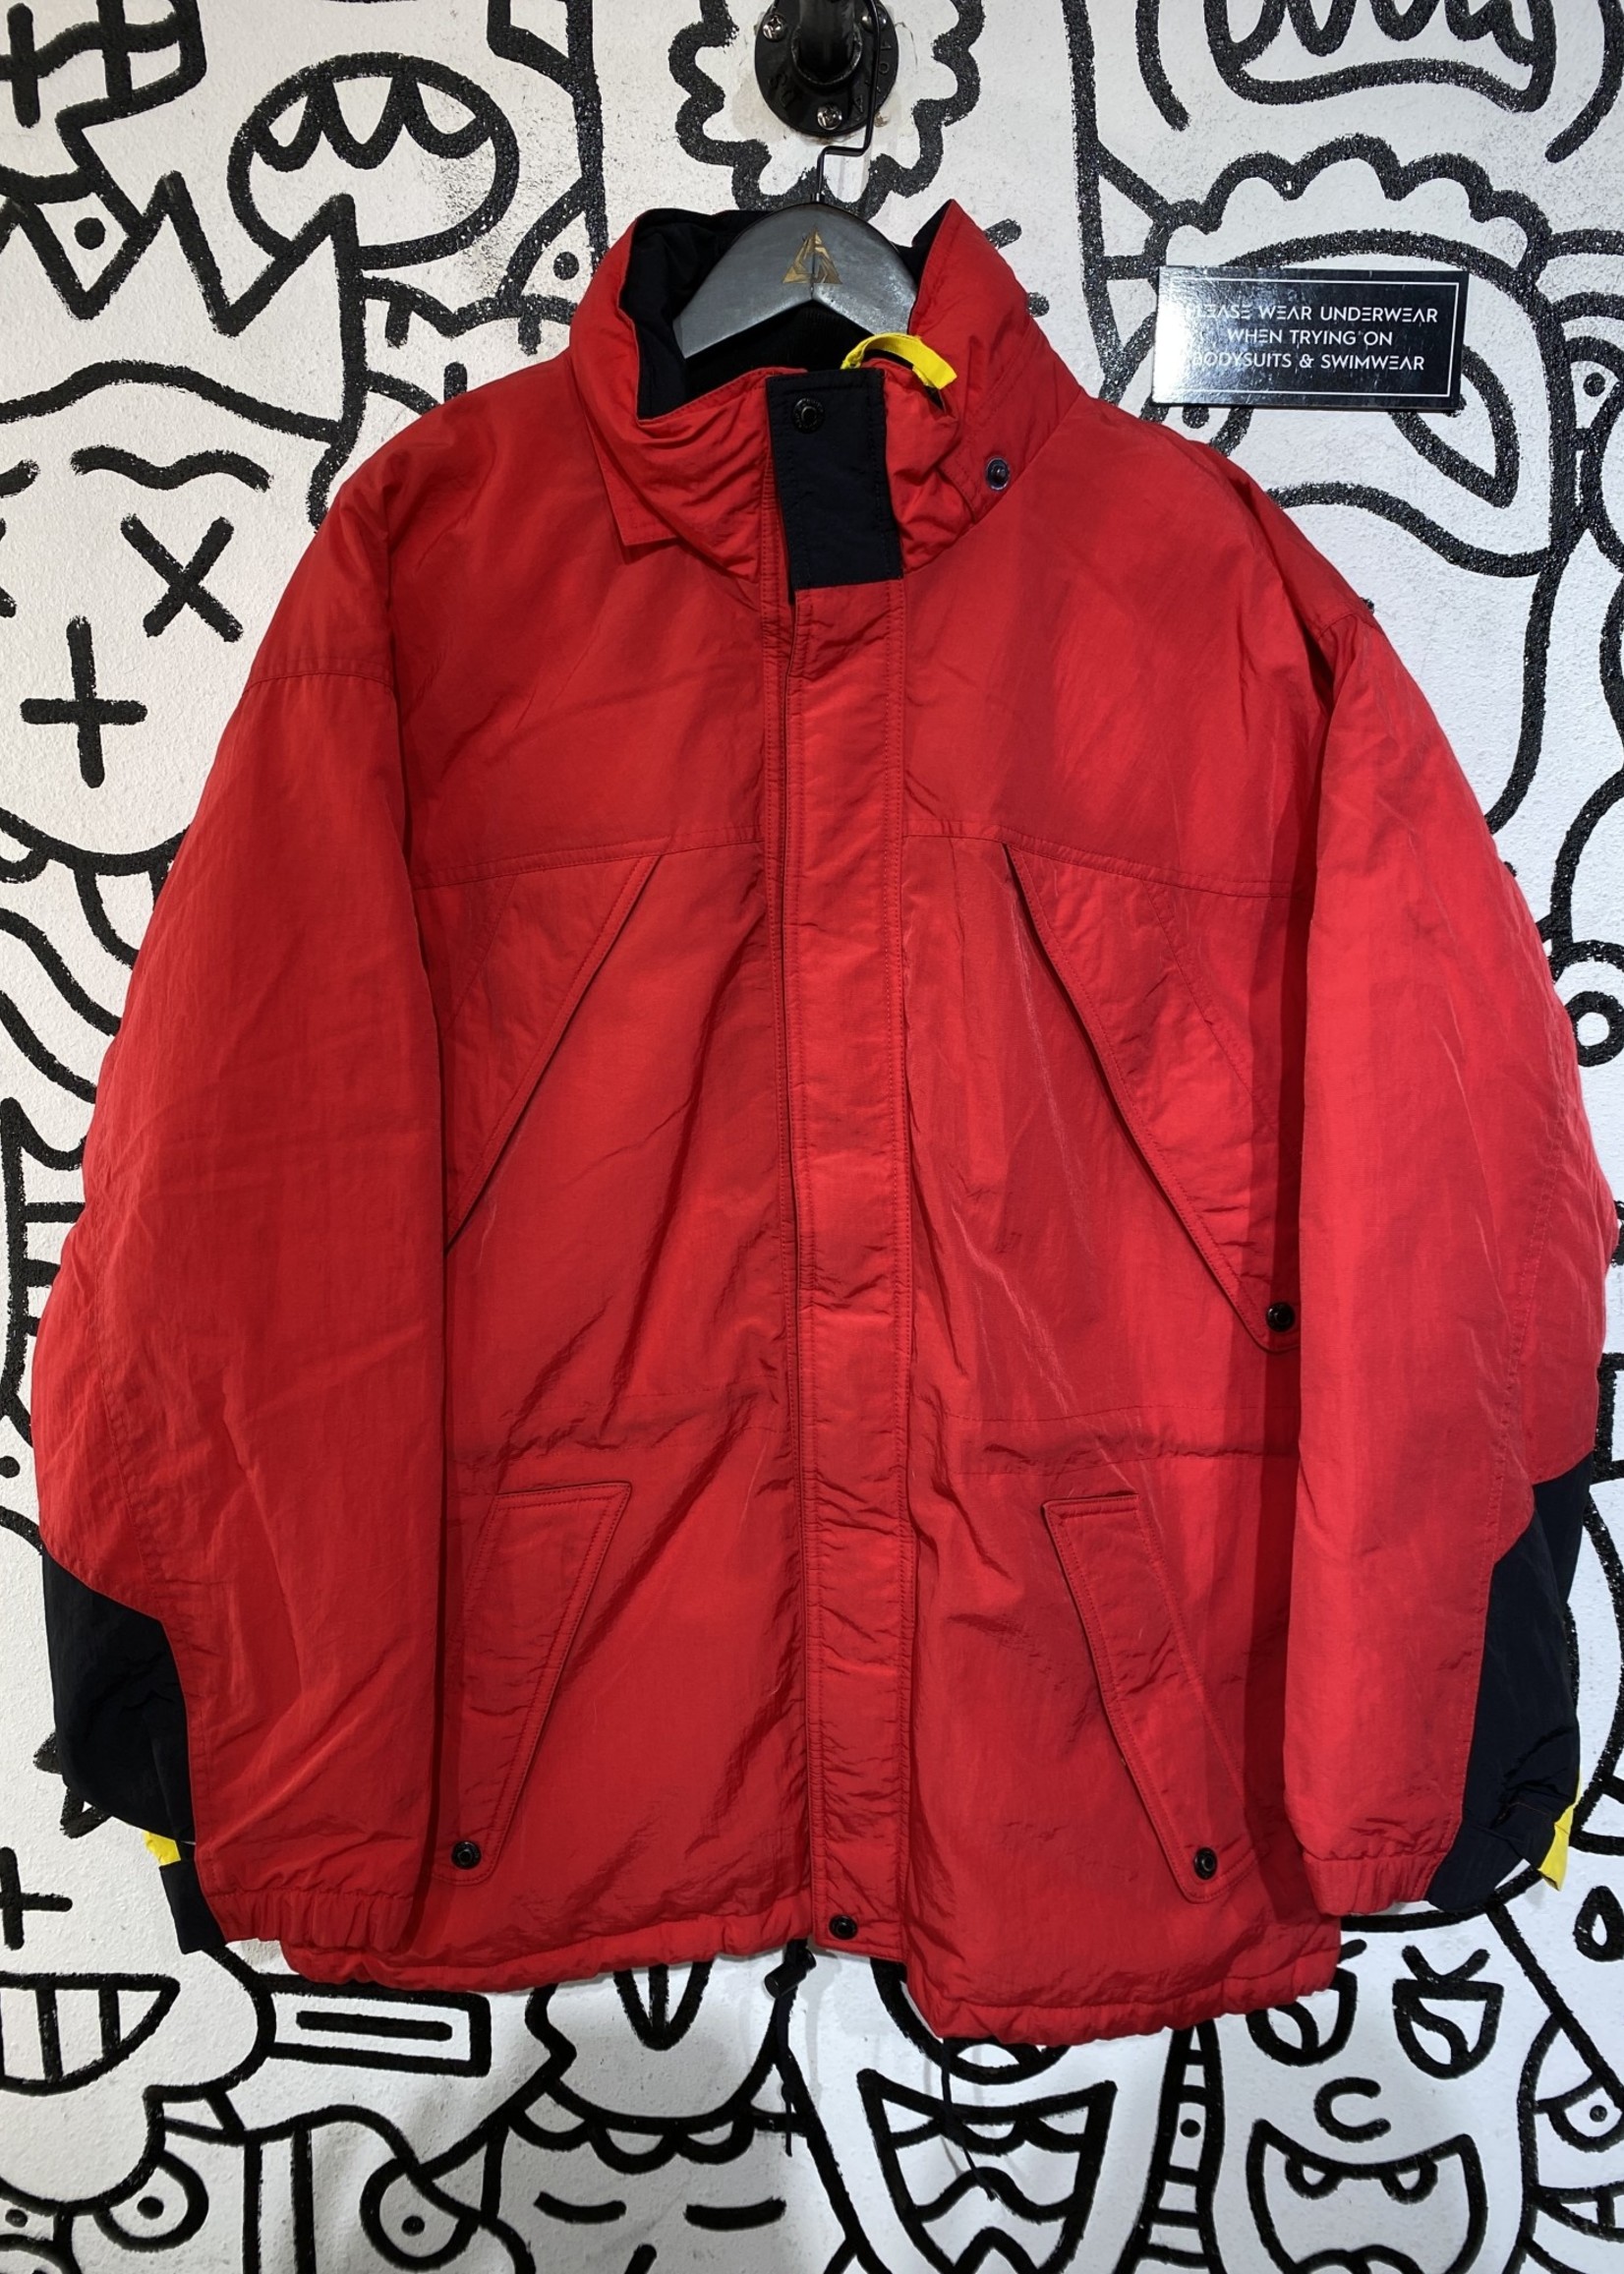 Marlboro Red Vintage Puffer Jacket L